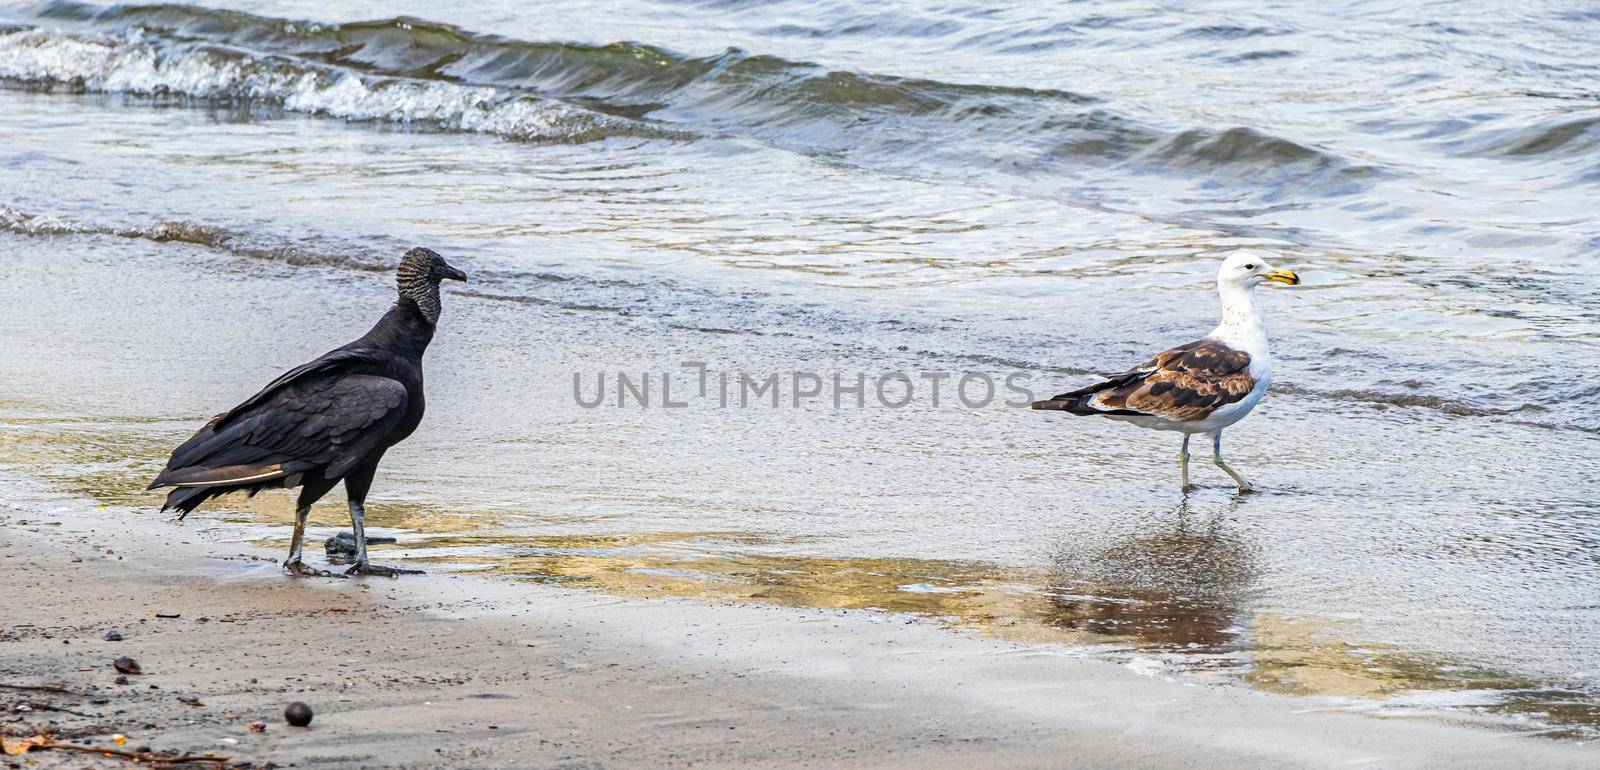 Tropical Black Vulture Coragyps atratus brasiliensis and a seagull on the Botafogo Beach sand in Rio de Janeiro Brazil.